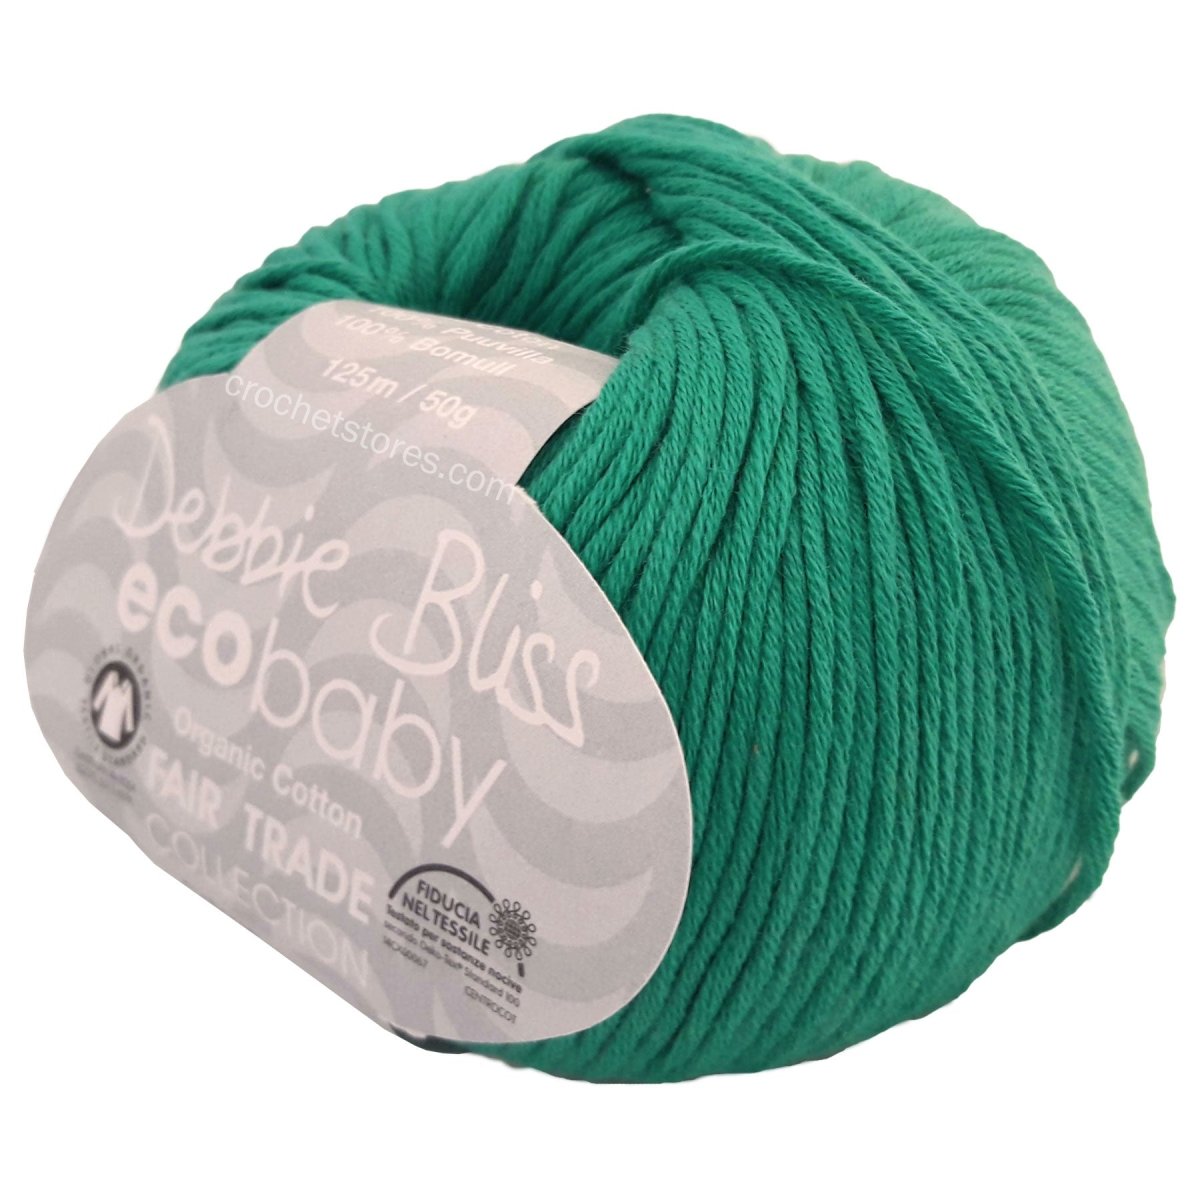 ECO BABY - CrochetstoresDB140498320980140490